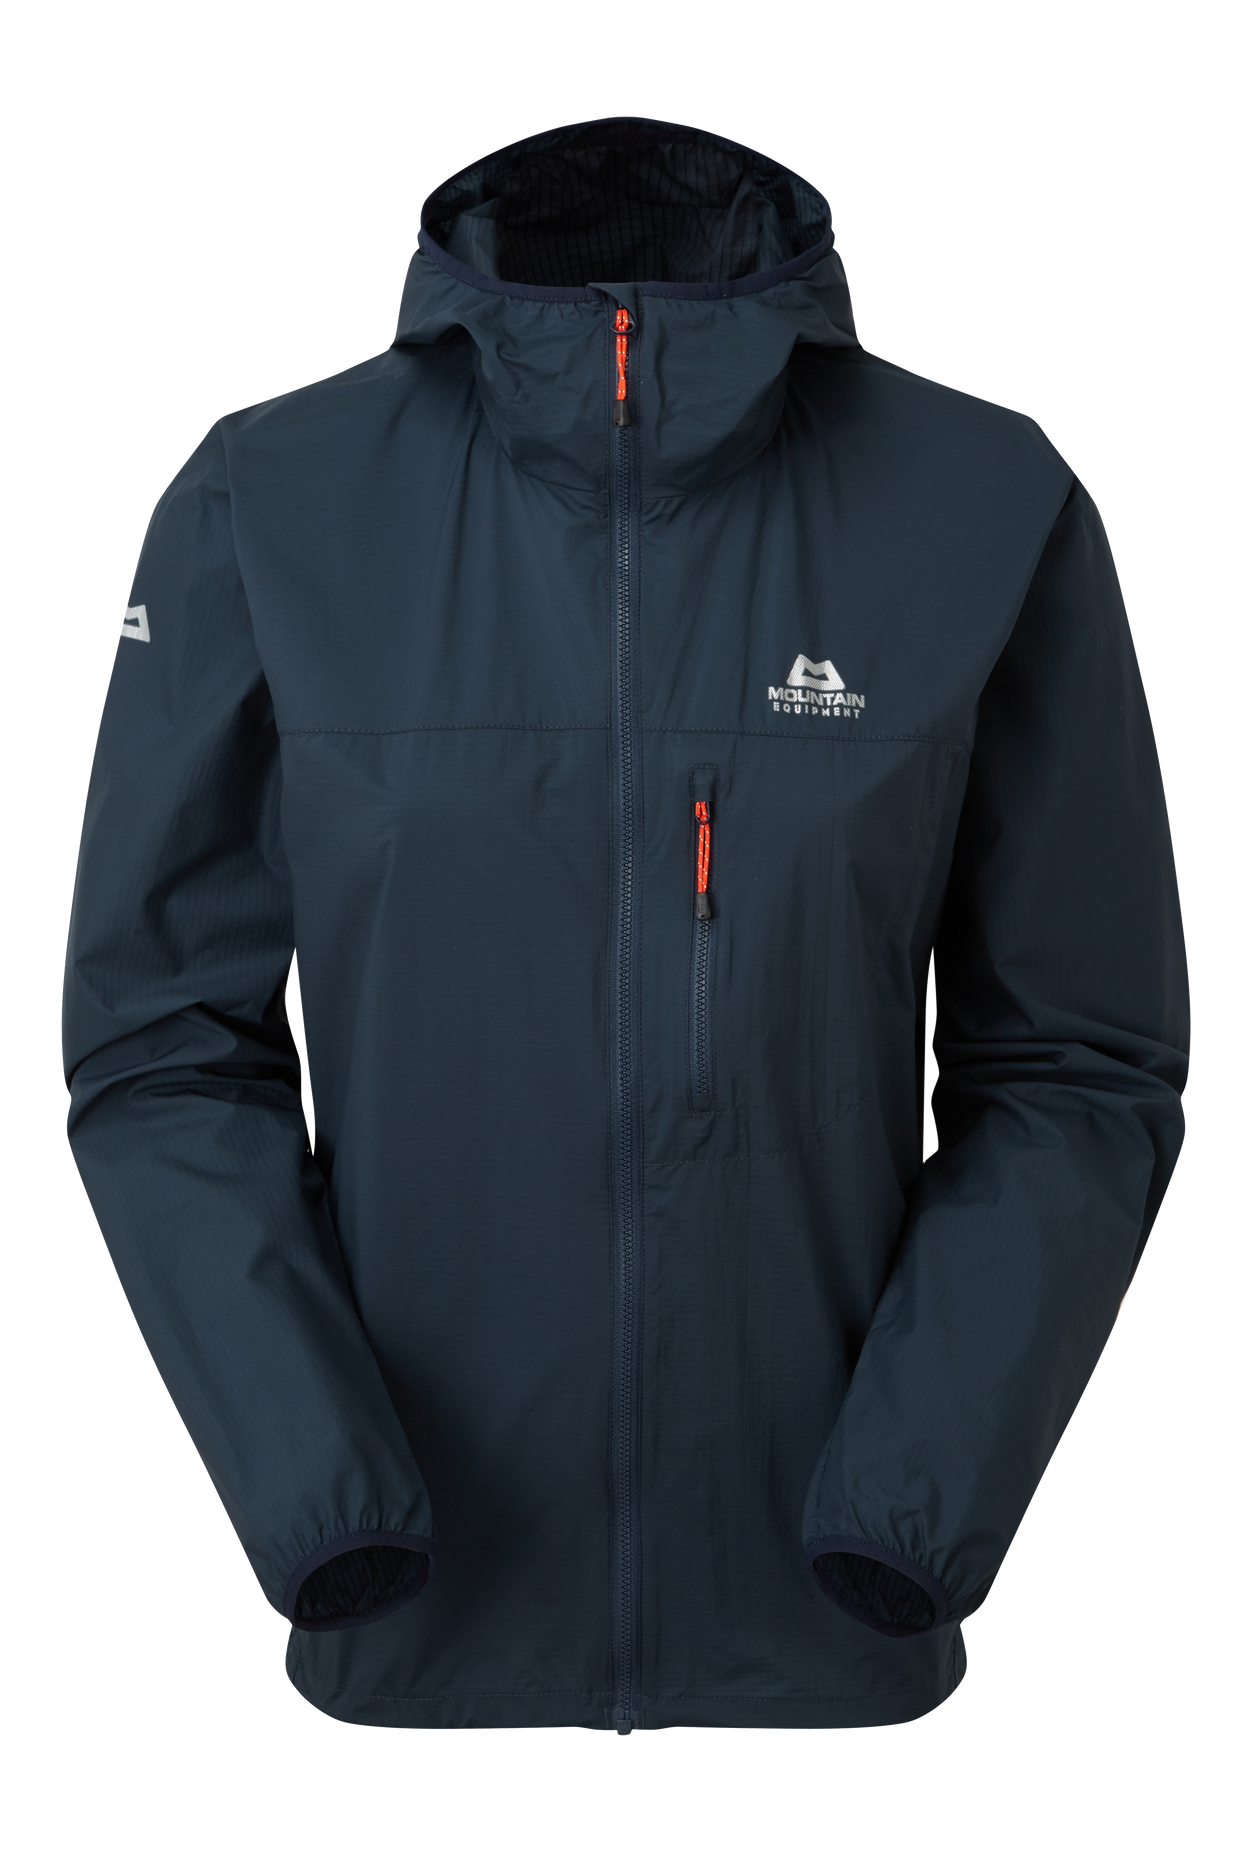 Mountain equipment dámská větruodolná bunda Aerofoil Full zip Wmns Jacket Barva: Blue Nights, Velikost: XS